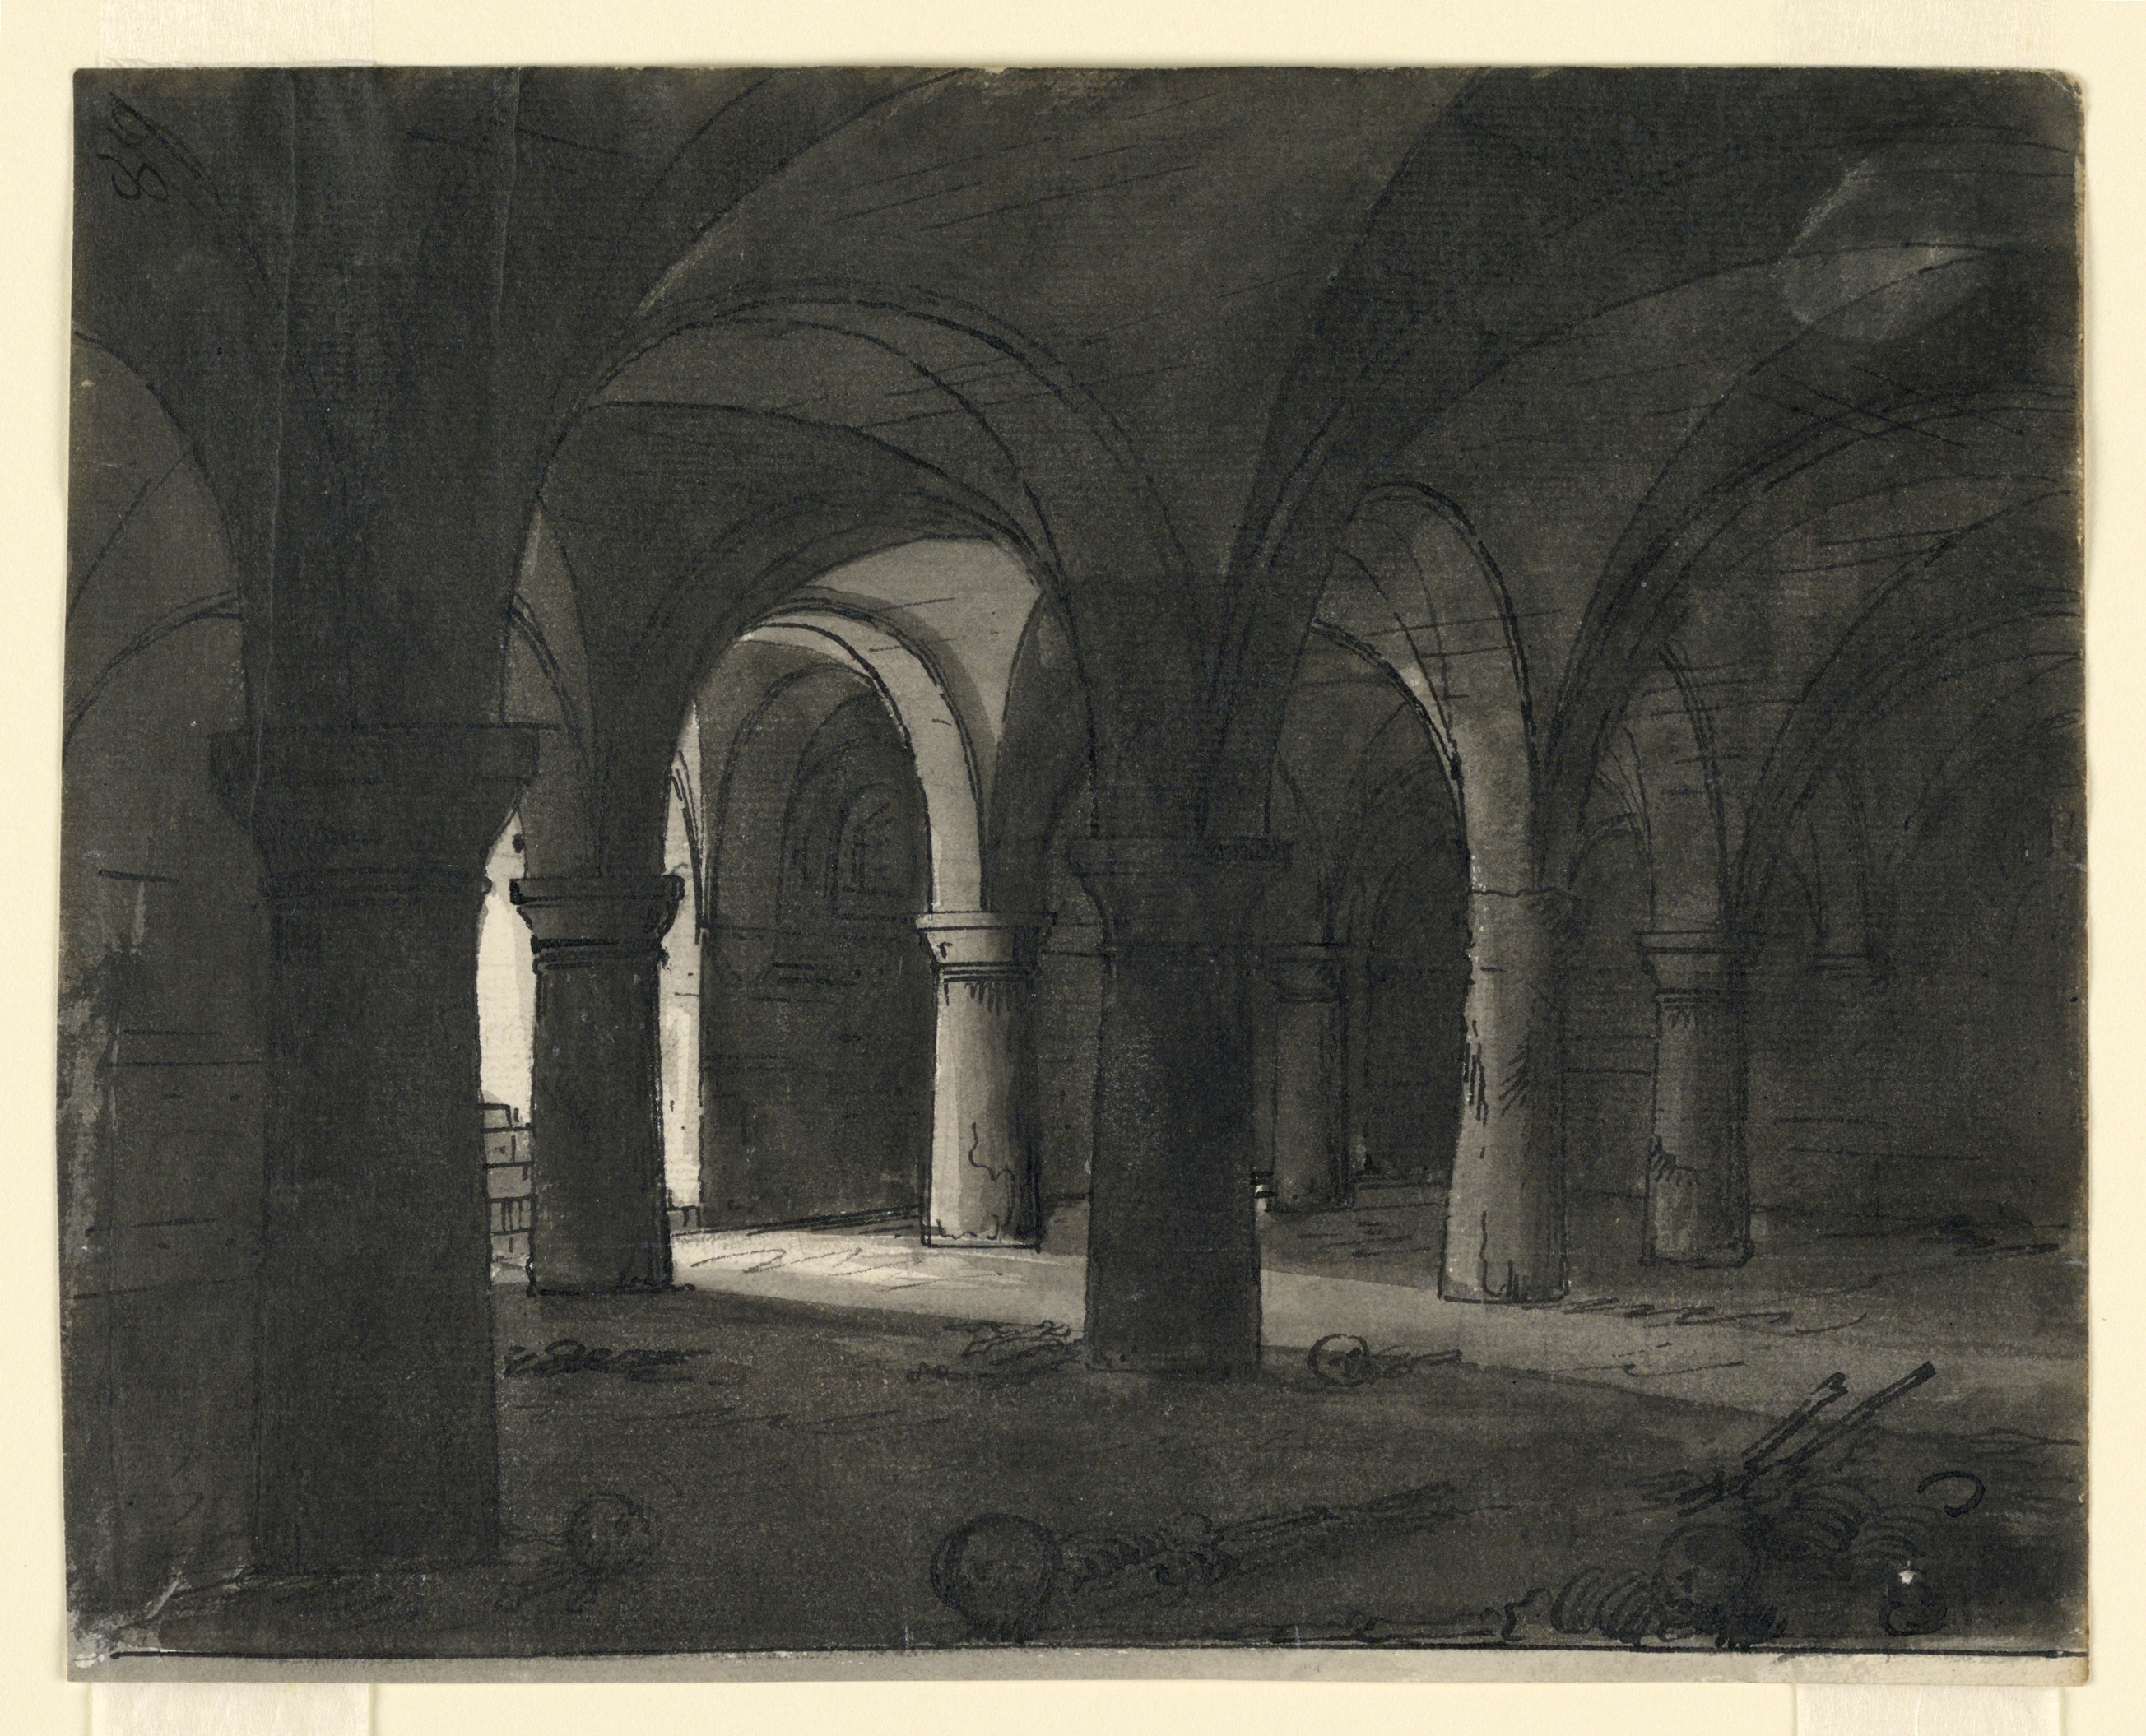 draft image of a dark crypt